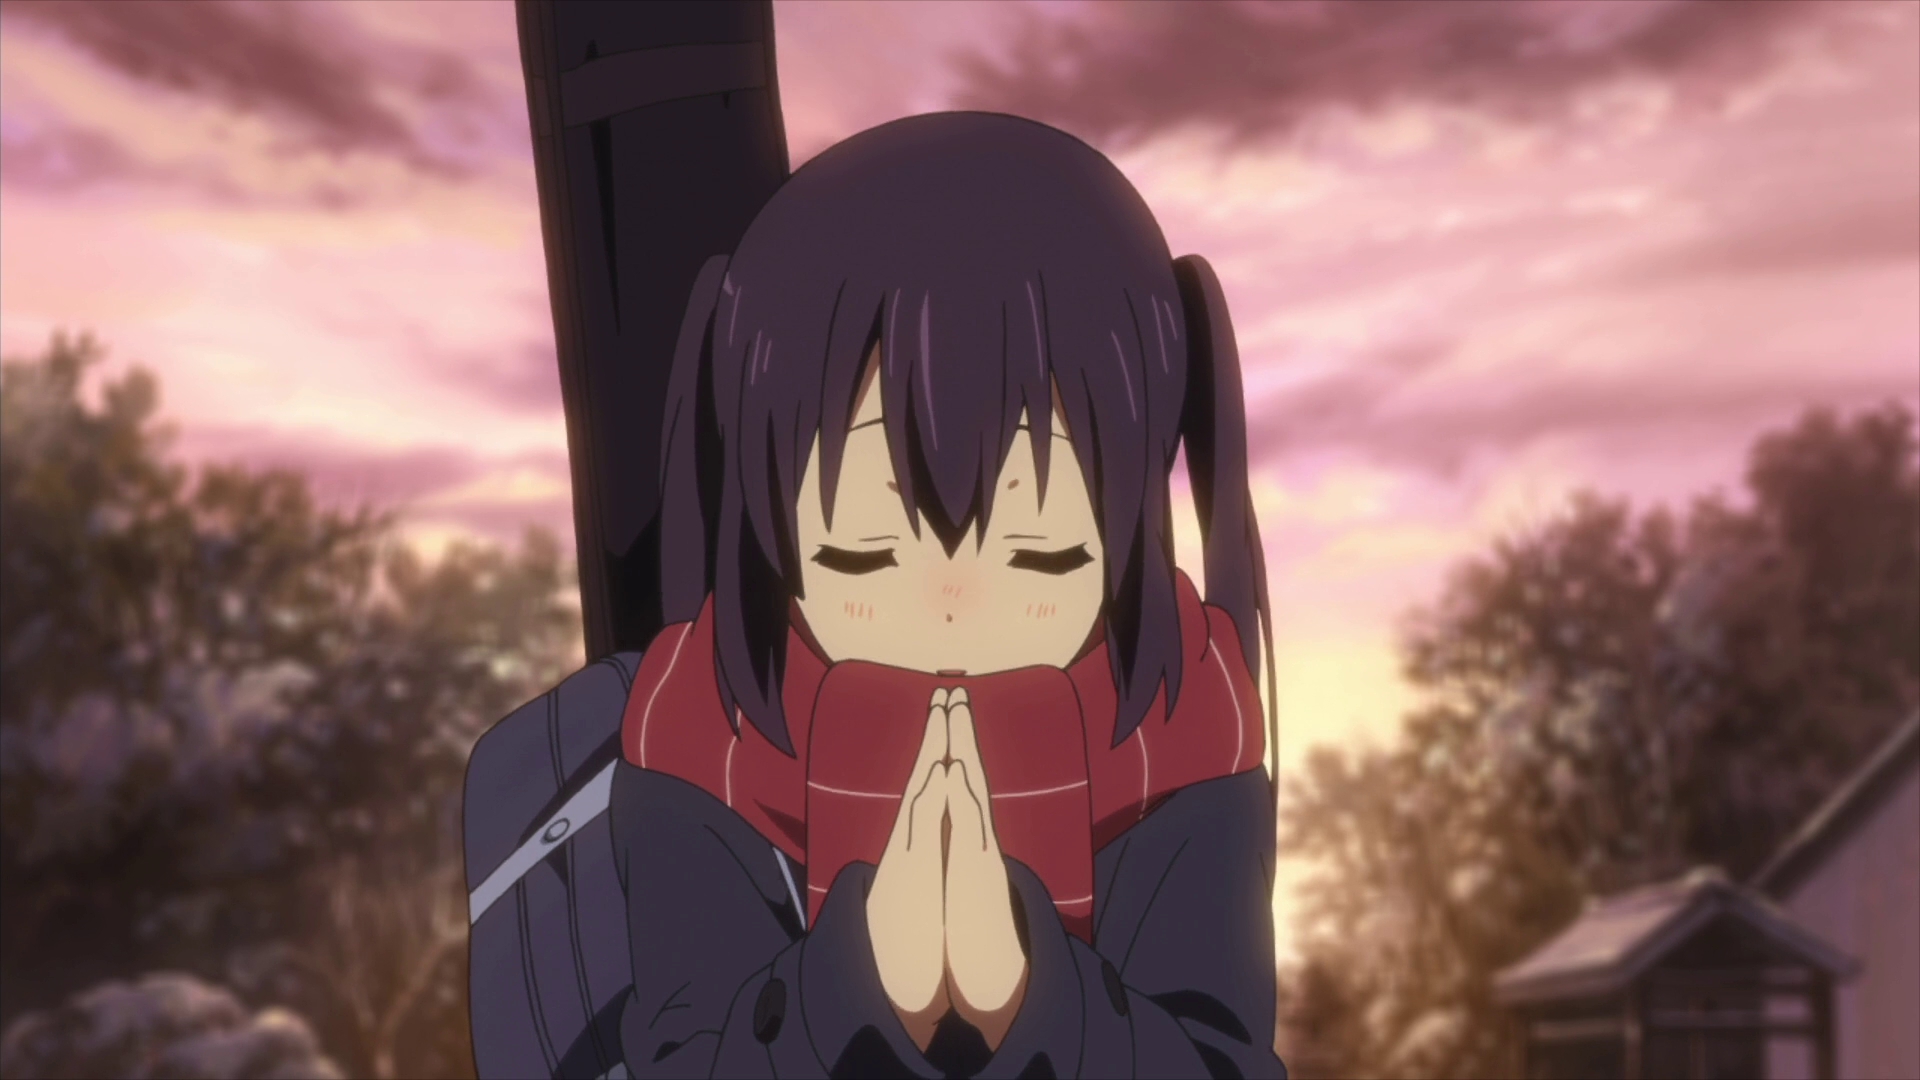 Desktop Wallpaper Anime Girl, Praying, Hd Image, Picture, Background, 9zvkdr